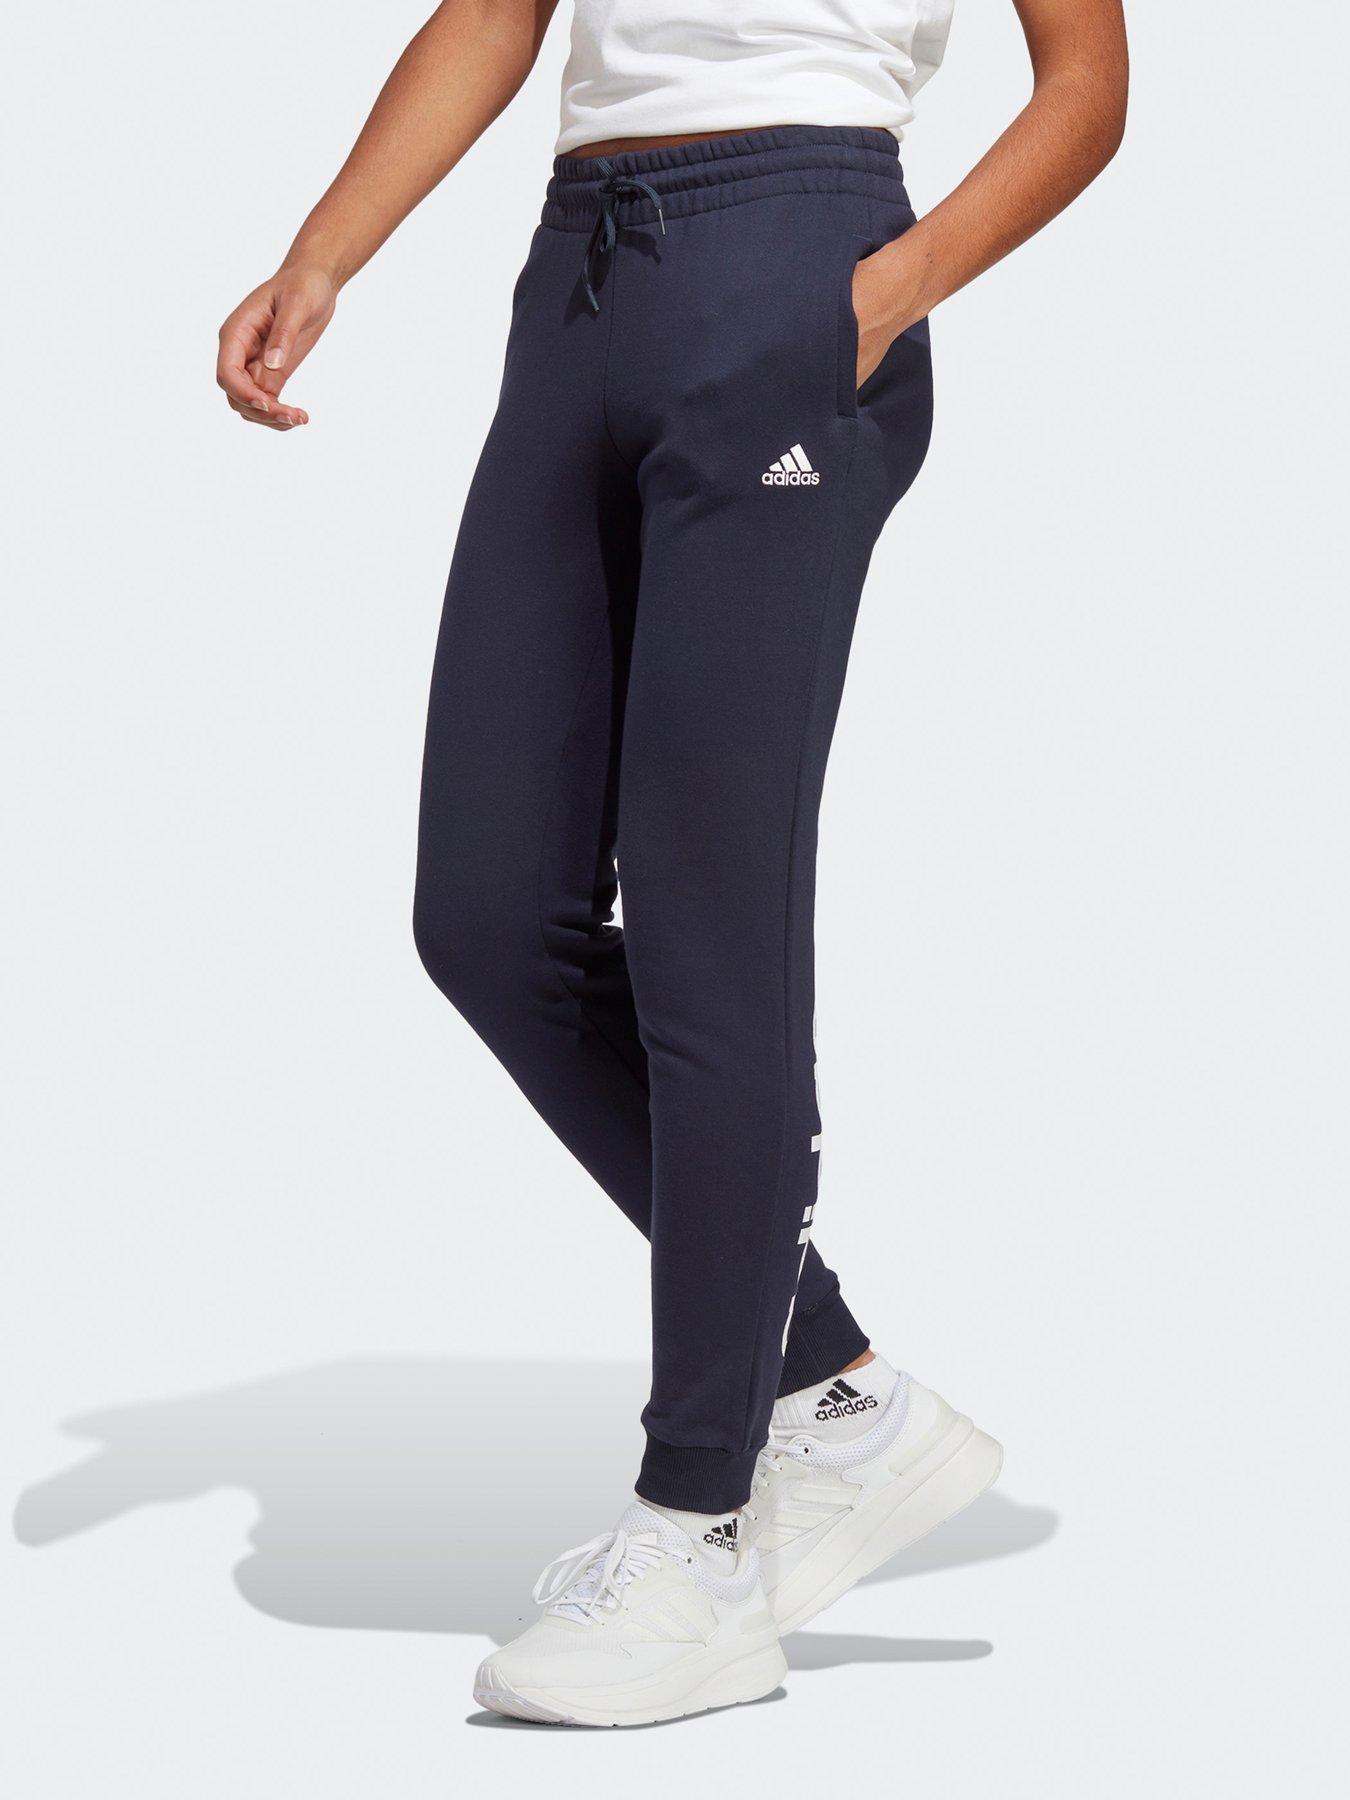 Adidas X Studio London Women's Sweatpants - Multi GN3358 - Trade Sports